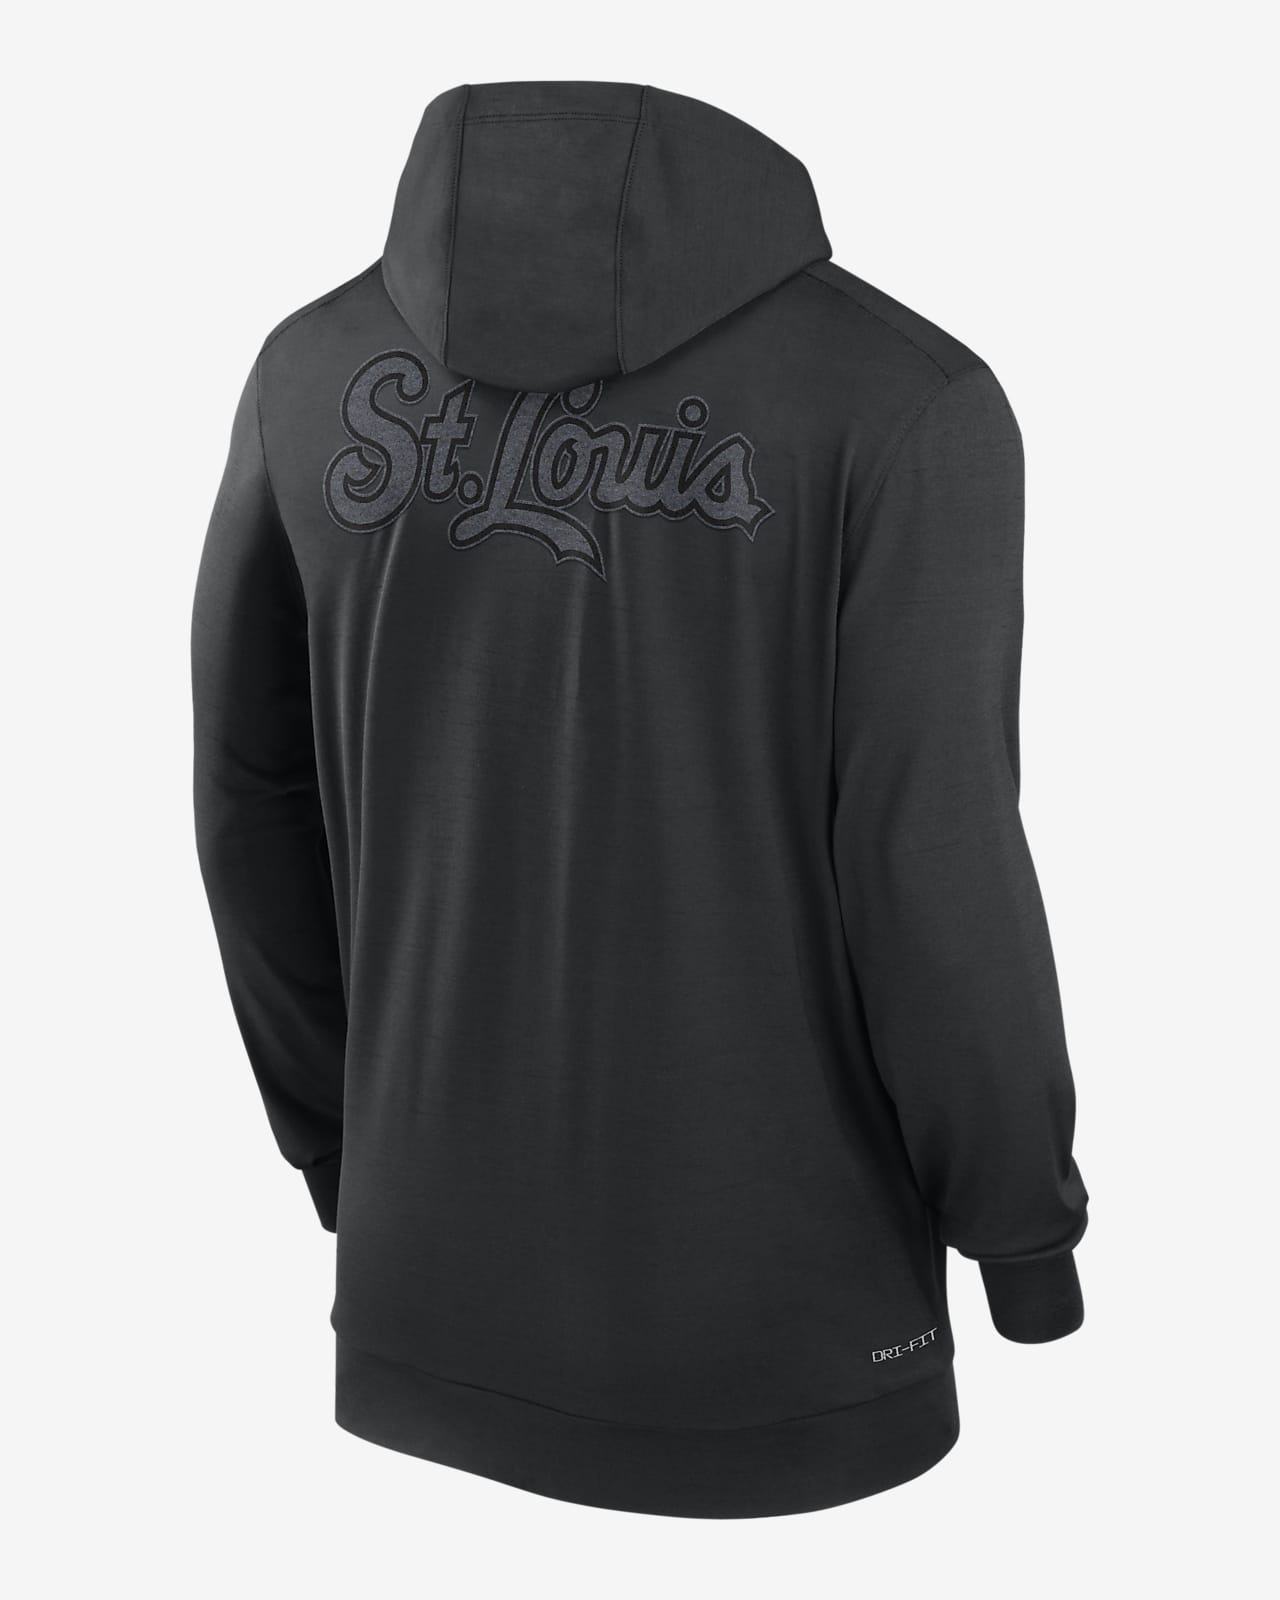 Nike St. Louis Cardinals Sweatshirt, Cardinals Hoodies, Cardinals Fleece